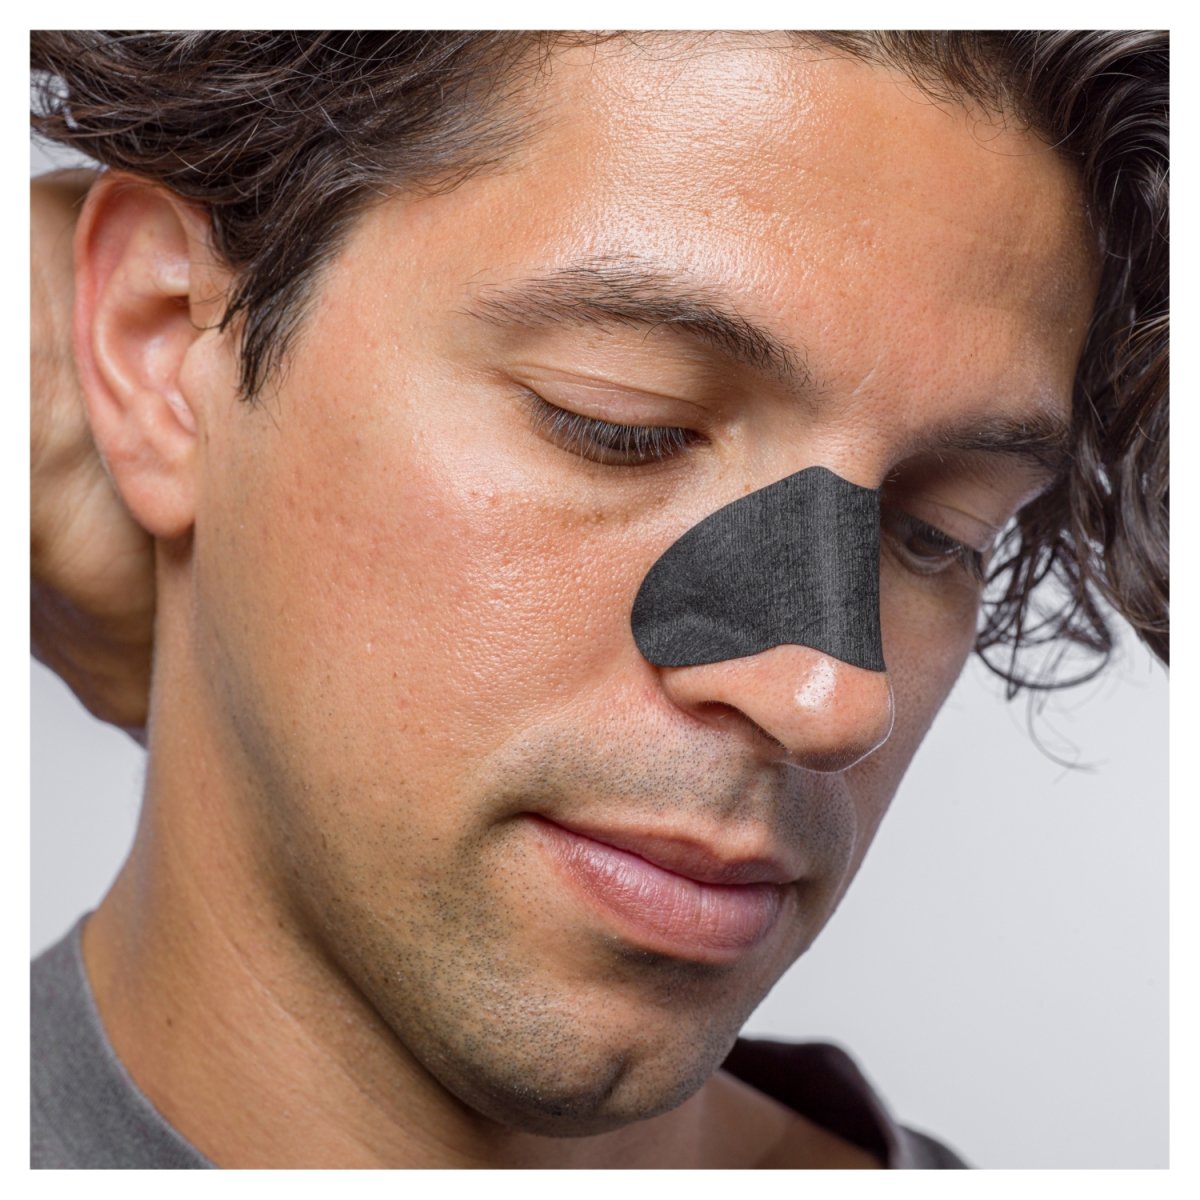 Garnier Pure Active Charcoal Anti-Blackhead Nose Strips x4 - Intamarque 3600542154666